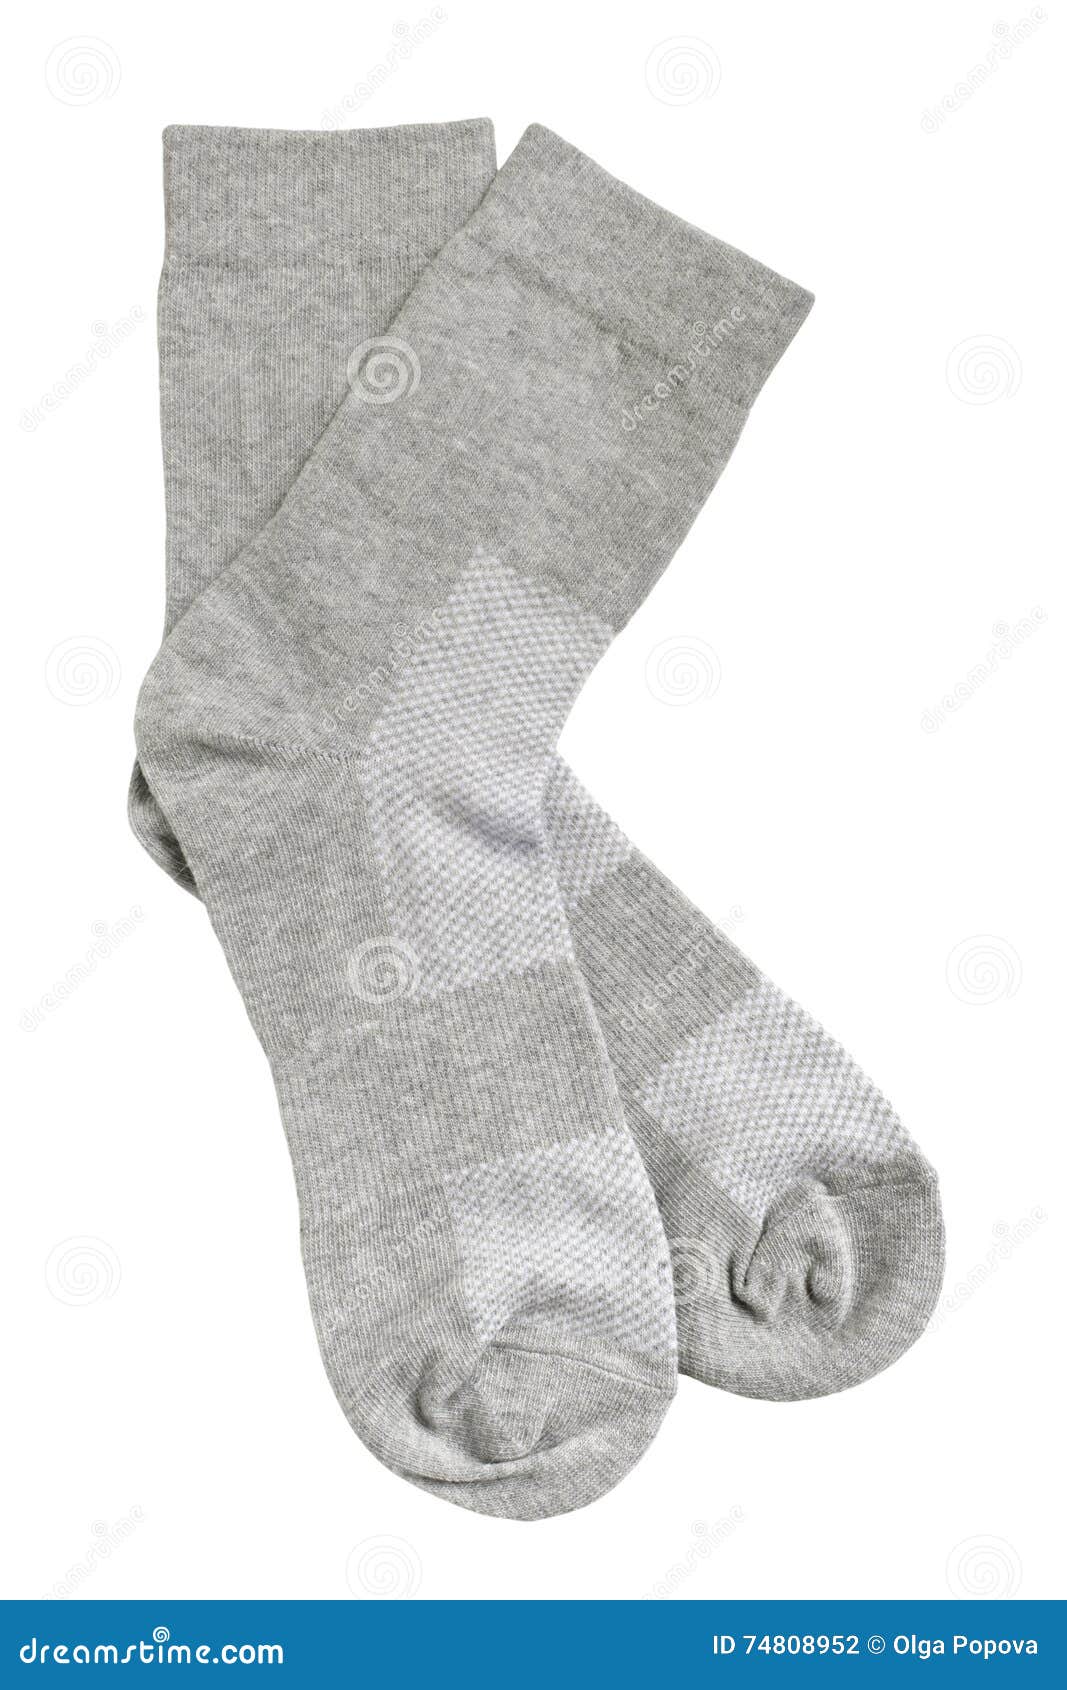 Pair of gray socks stock photo. Image of cute, classic - 74808952